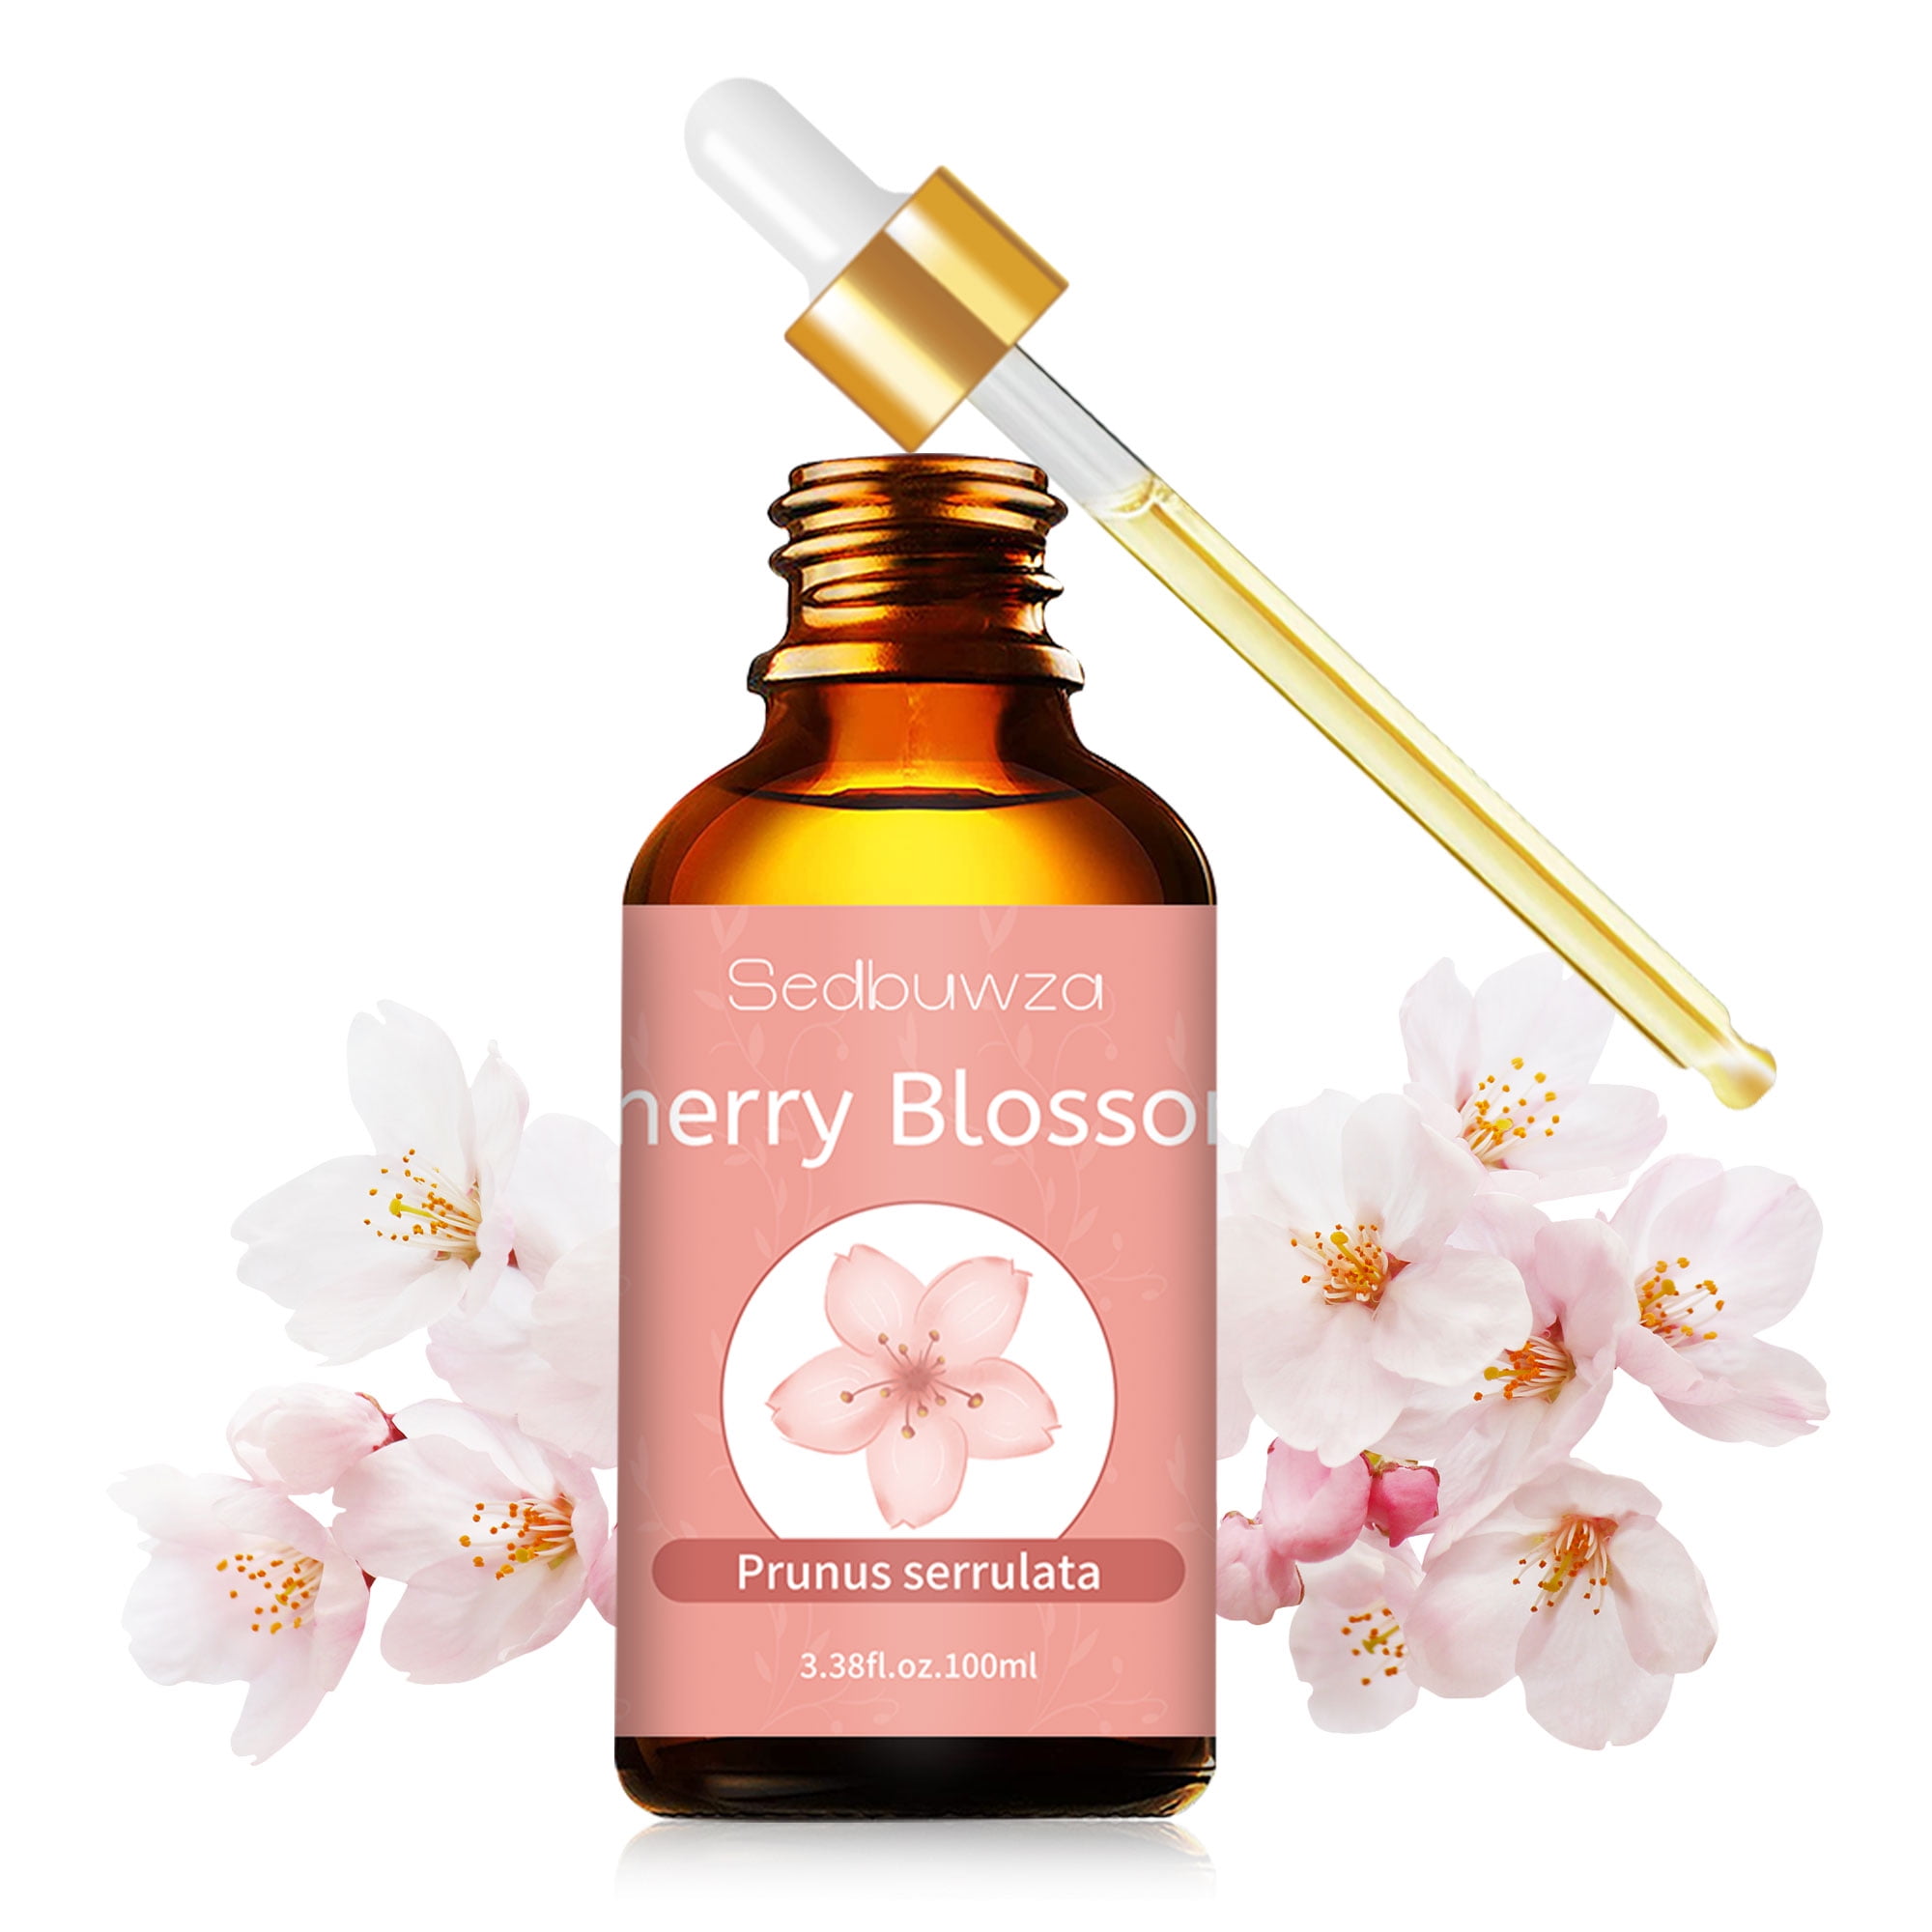 AOPING Cherry Blossom Essential Oil - 100% Pure Organic Natural Plant  (Prunus serrulata) Cherry Blossom Oil for Diffuser, Aroma, Spa, Massage,  Yoga